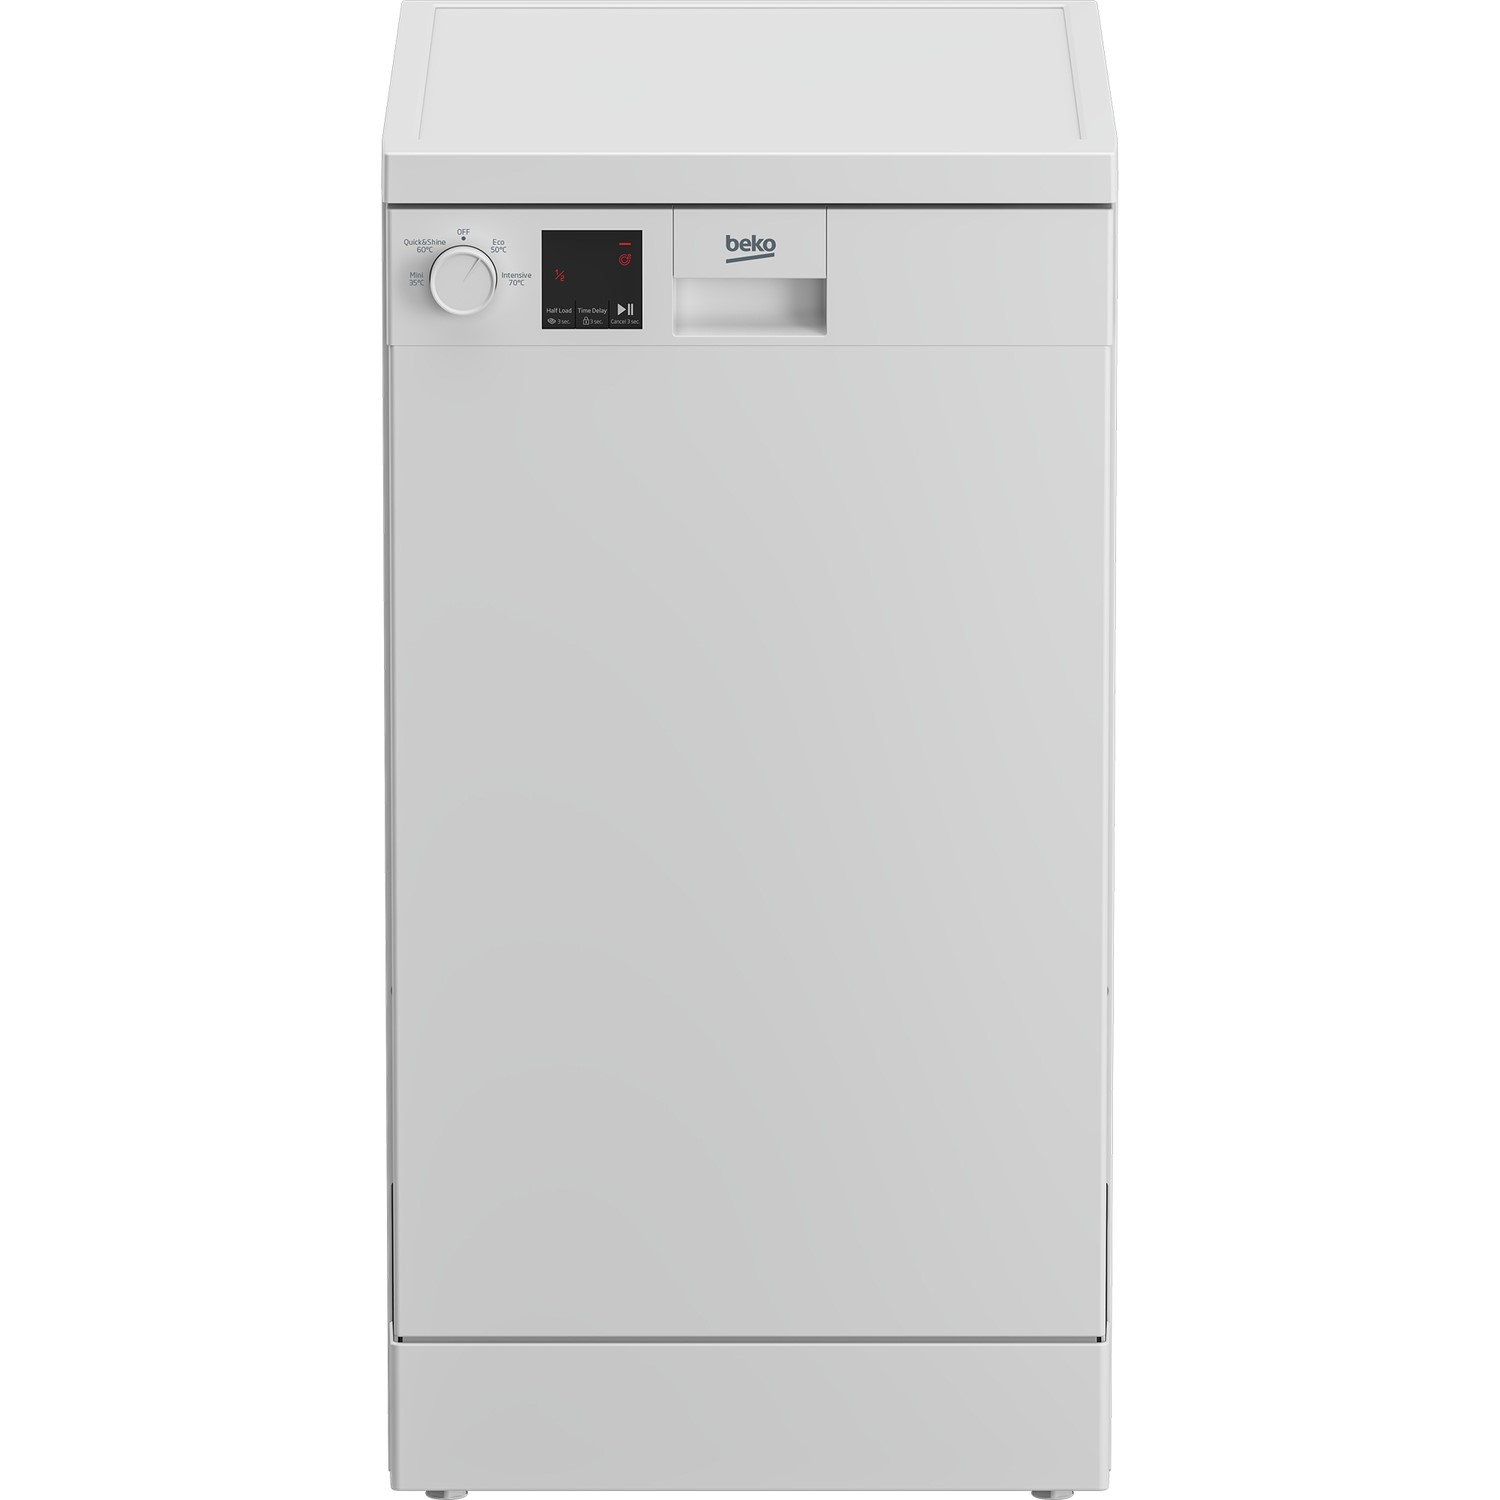 Refurbished Beko DVS04020W Slimline 10 Place Freestanding Dishwasher